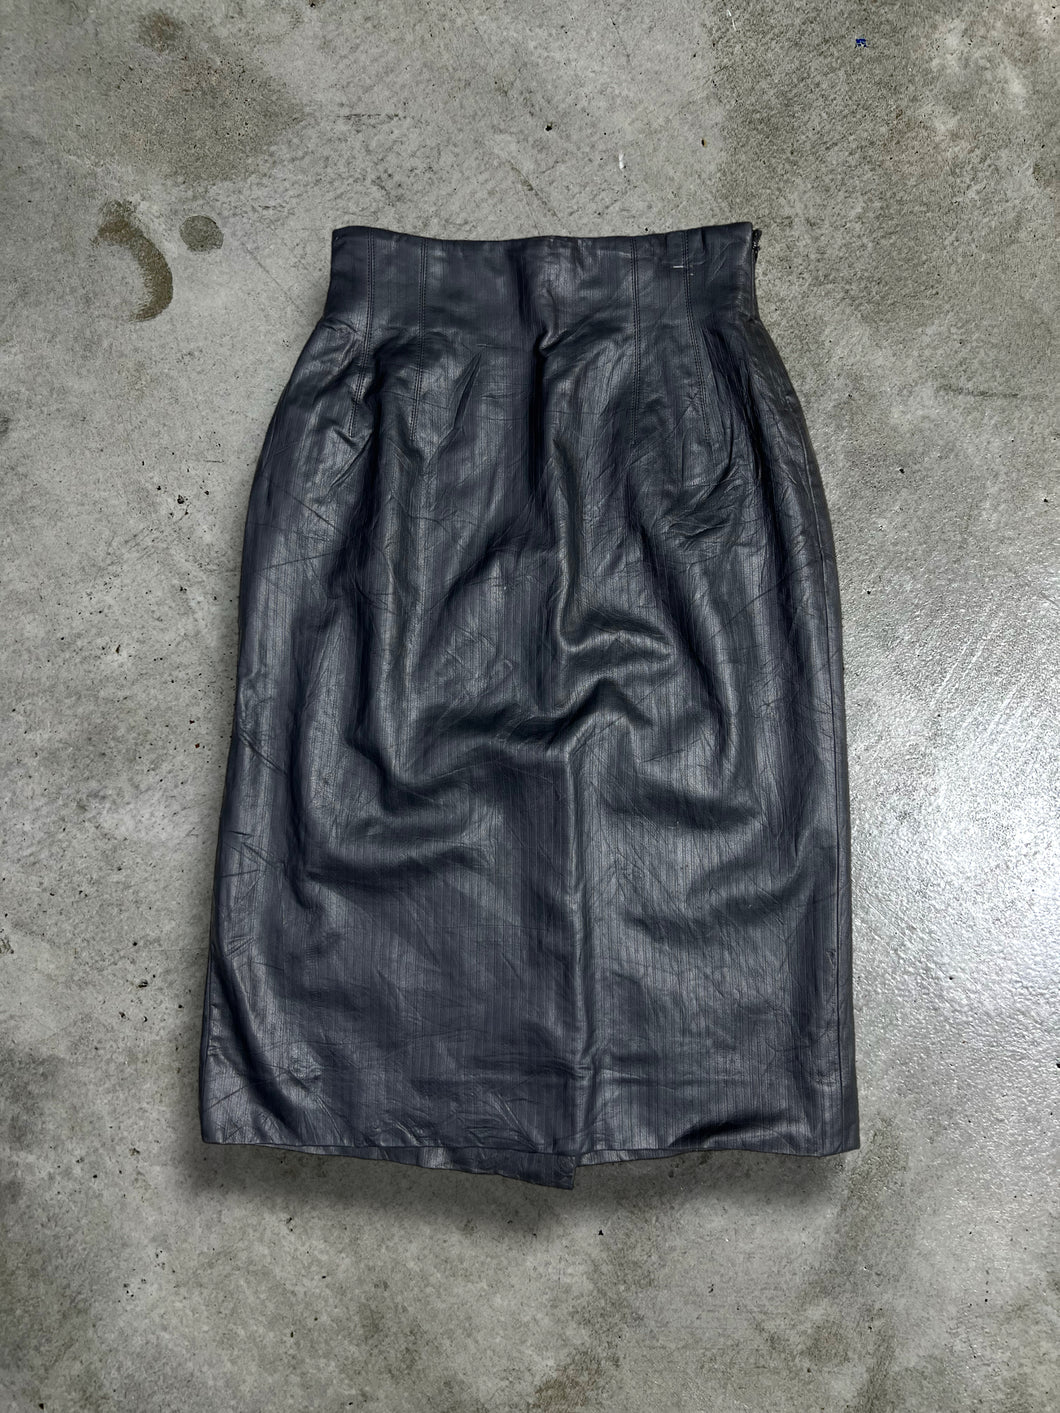 Vintage Christian Dior Leather Skirt GTMPT366